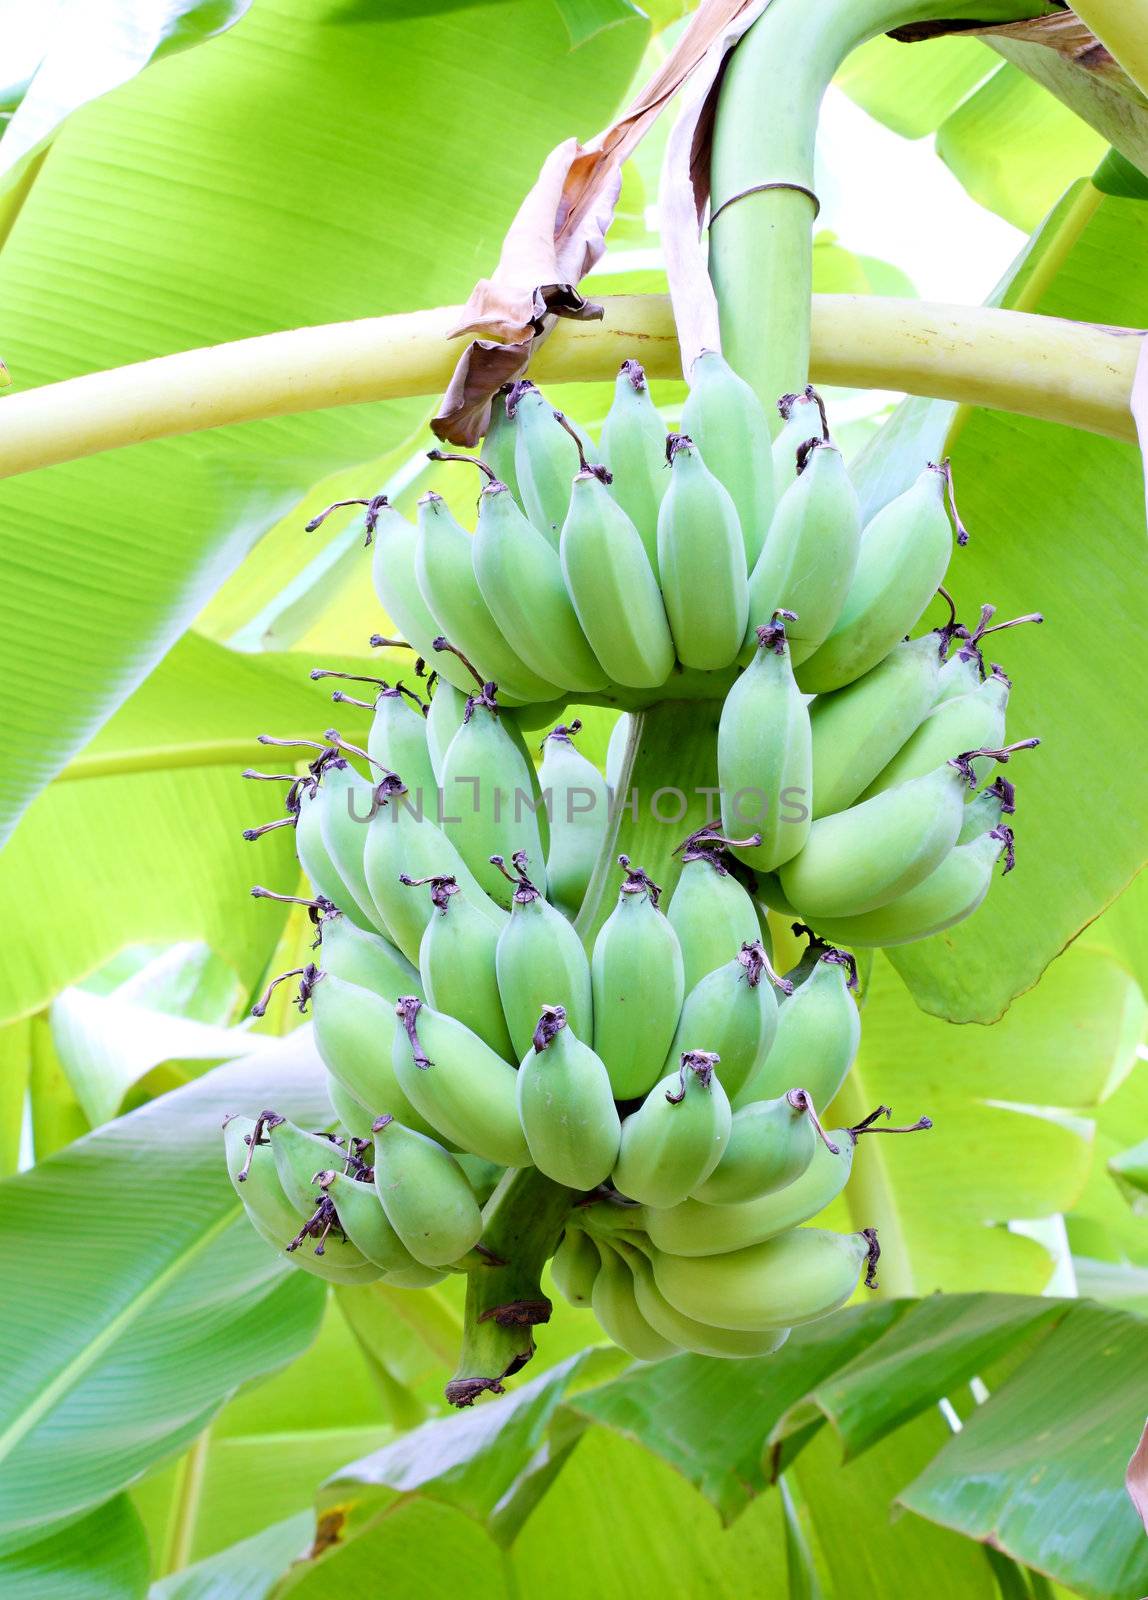 green bananas on a tree